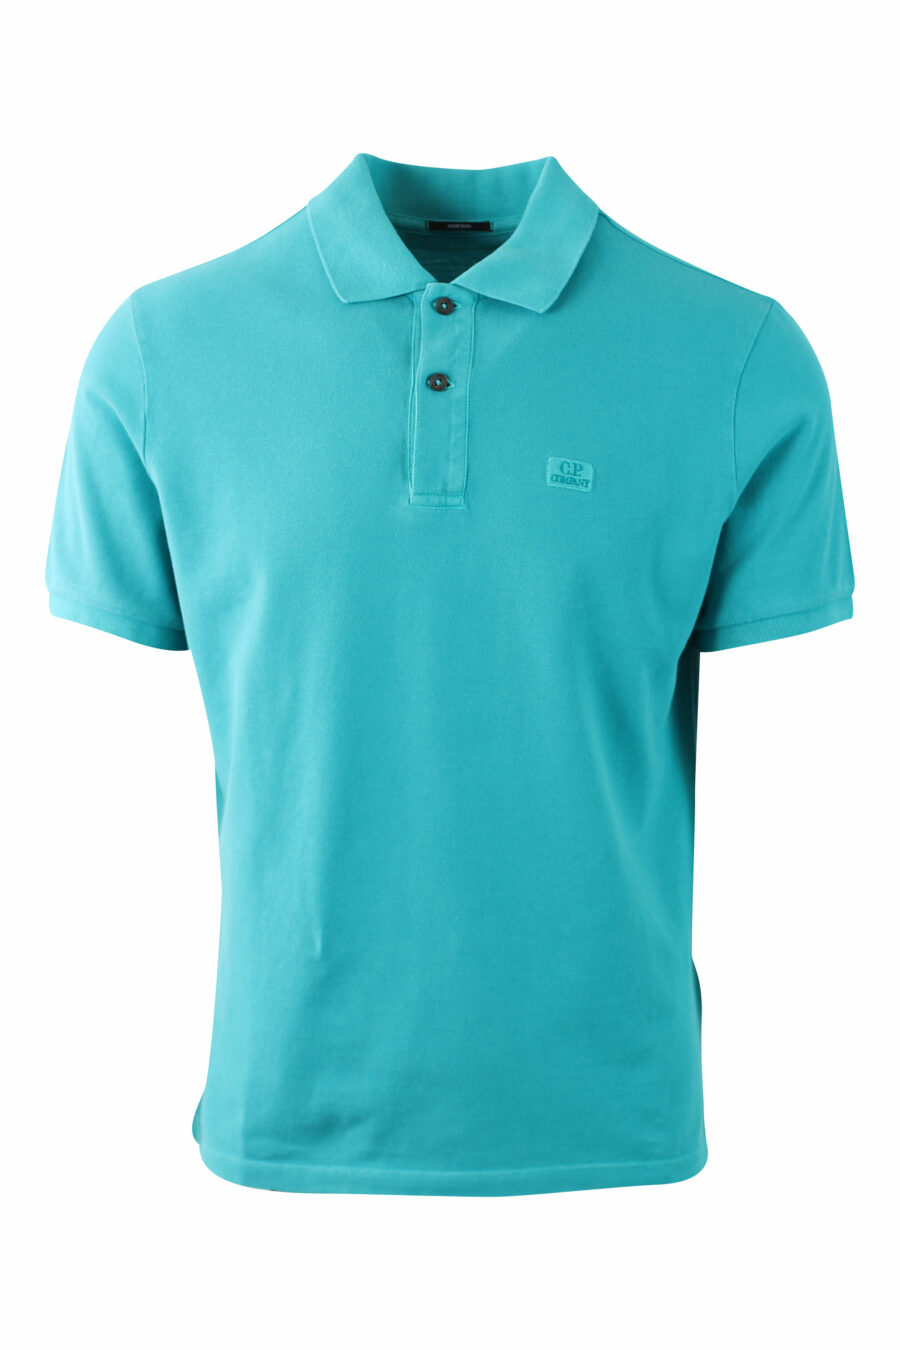 Polo turquoise avec mini logo - IMG 0059